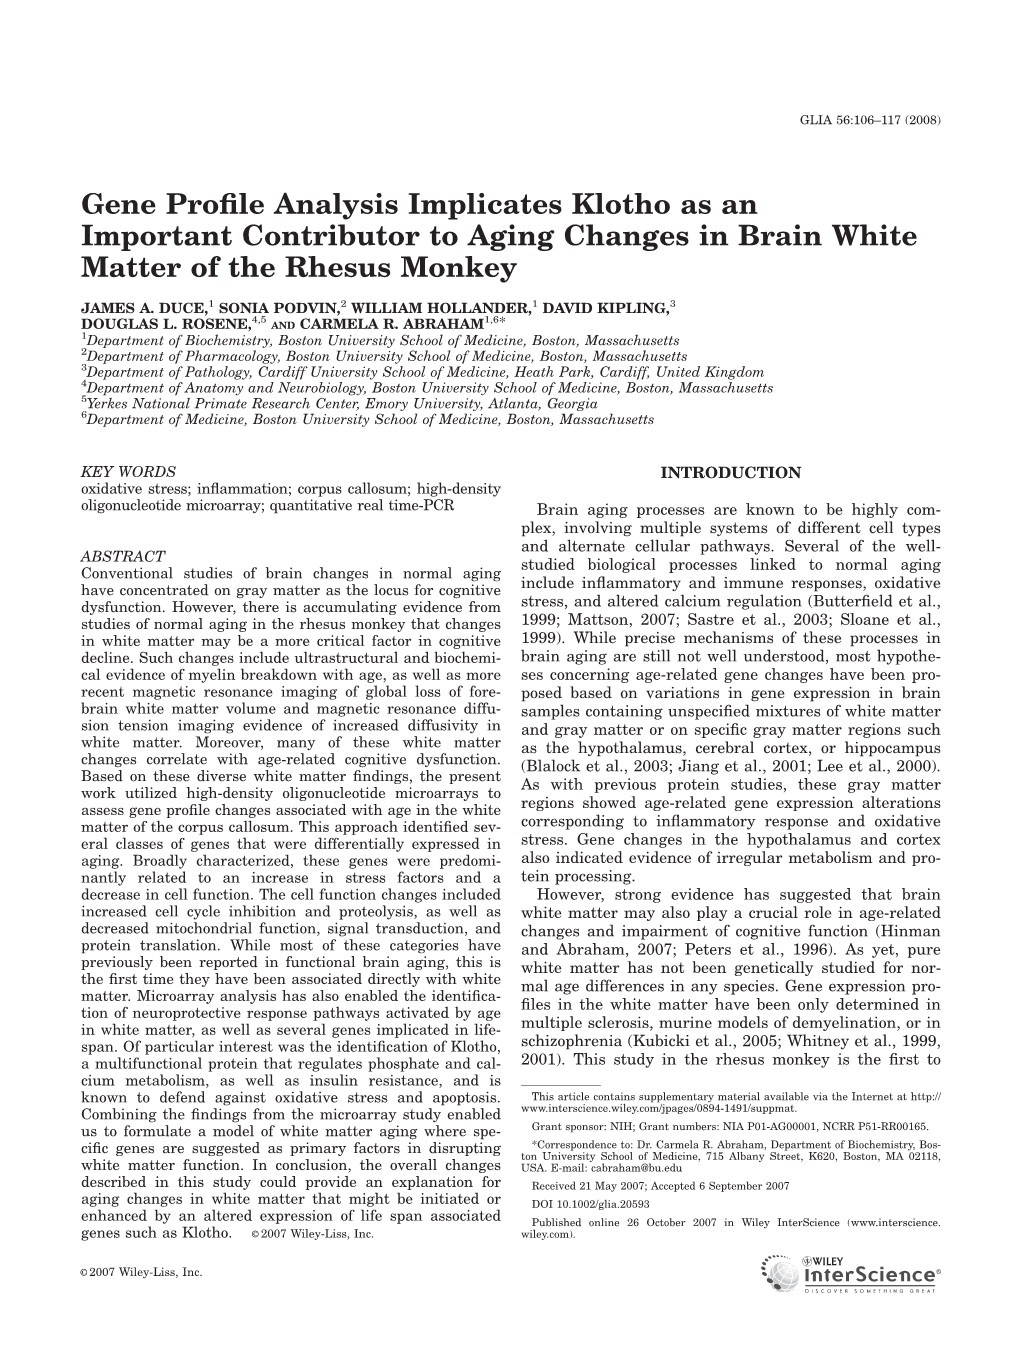 Gene Profile Analysis Implicates Klotho As an Important Contributor